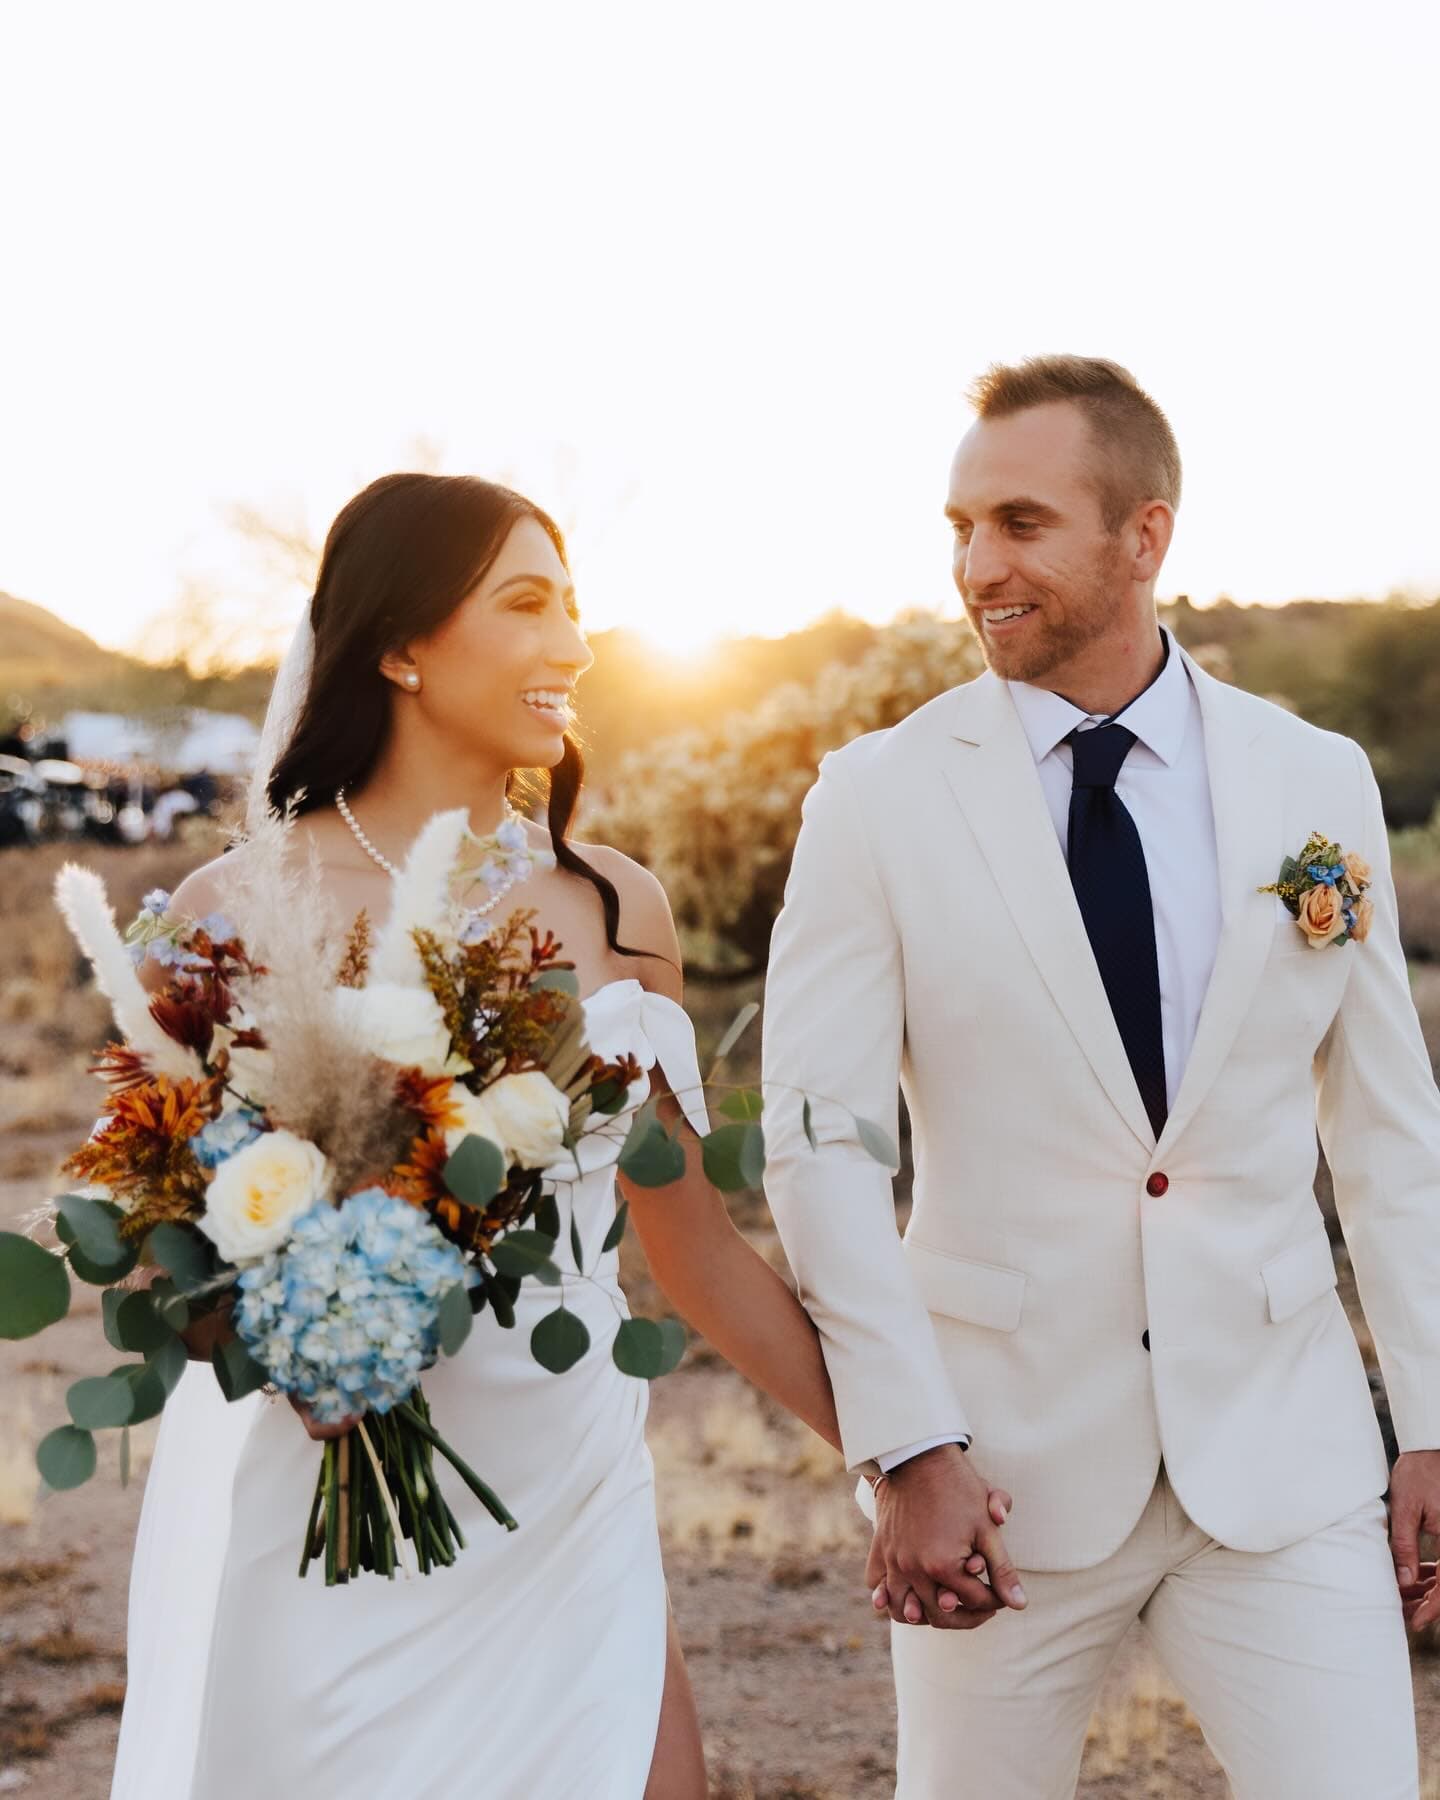 Desert Weddings: An Unforgettable Experience